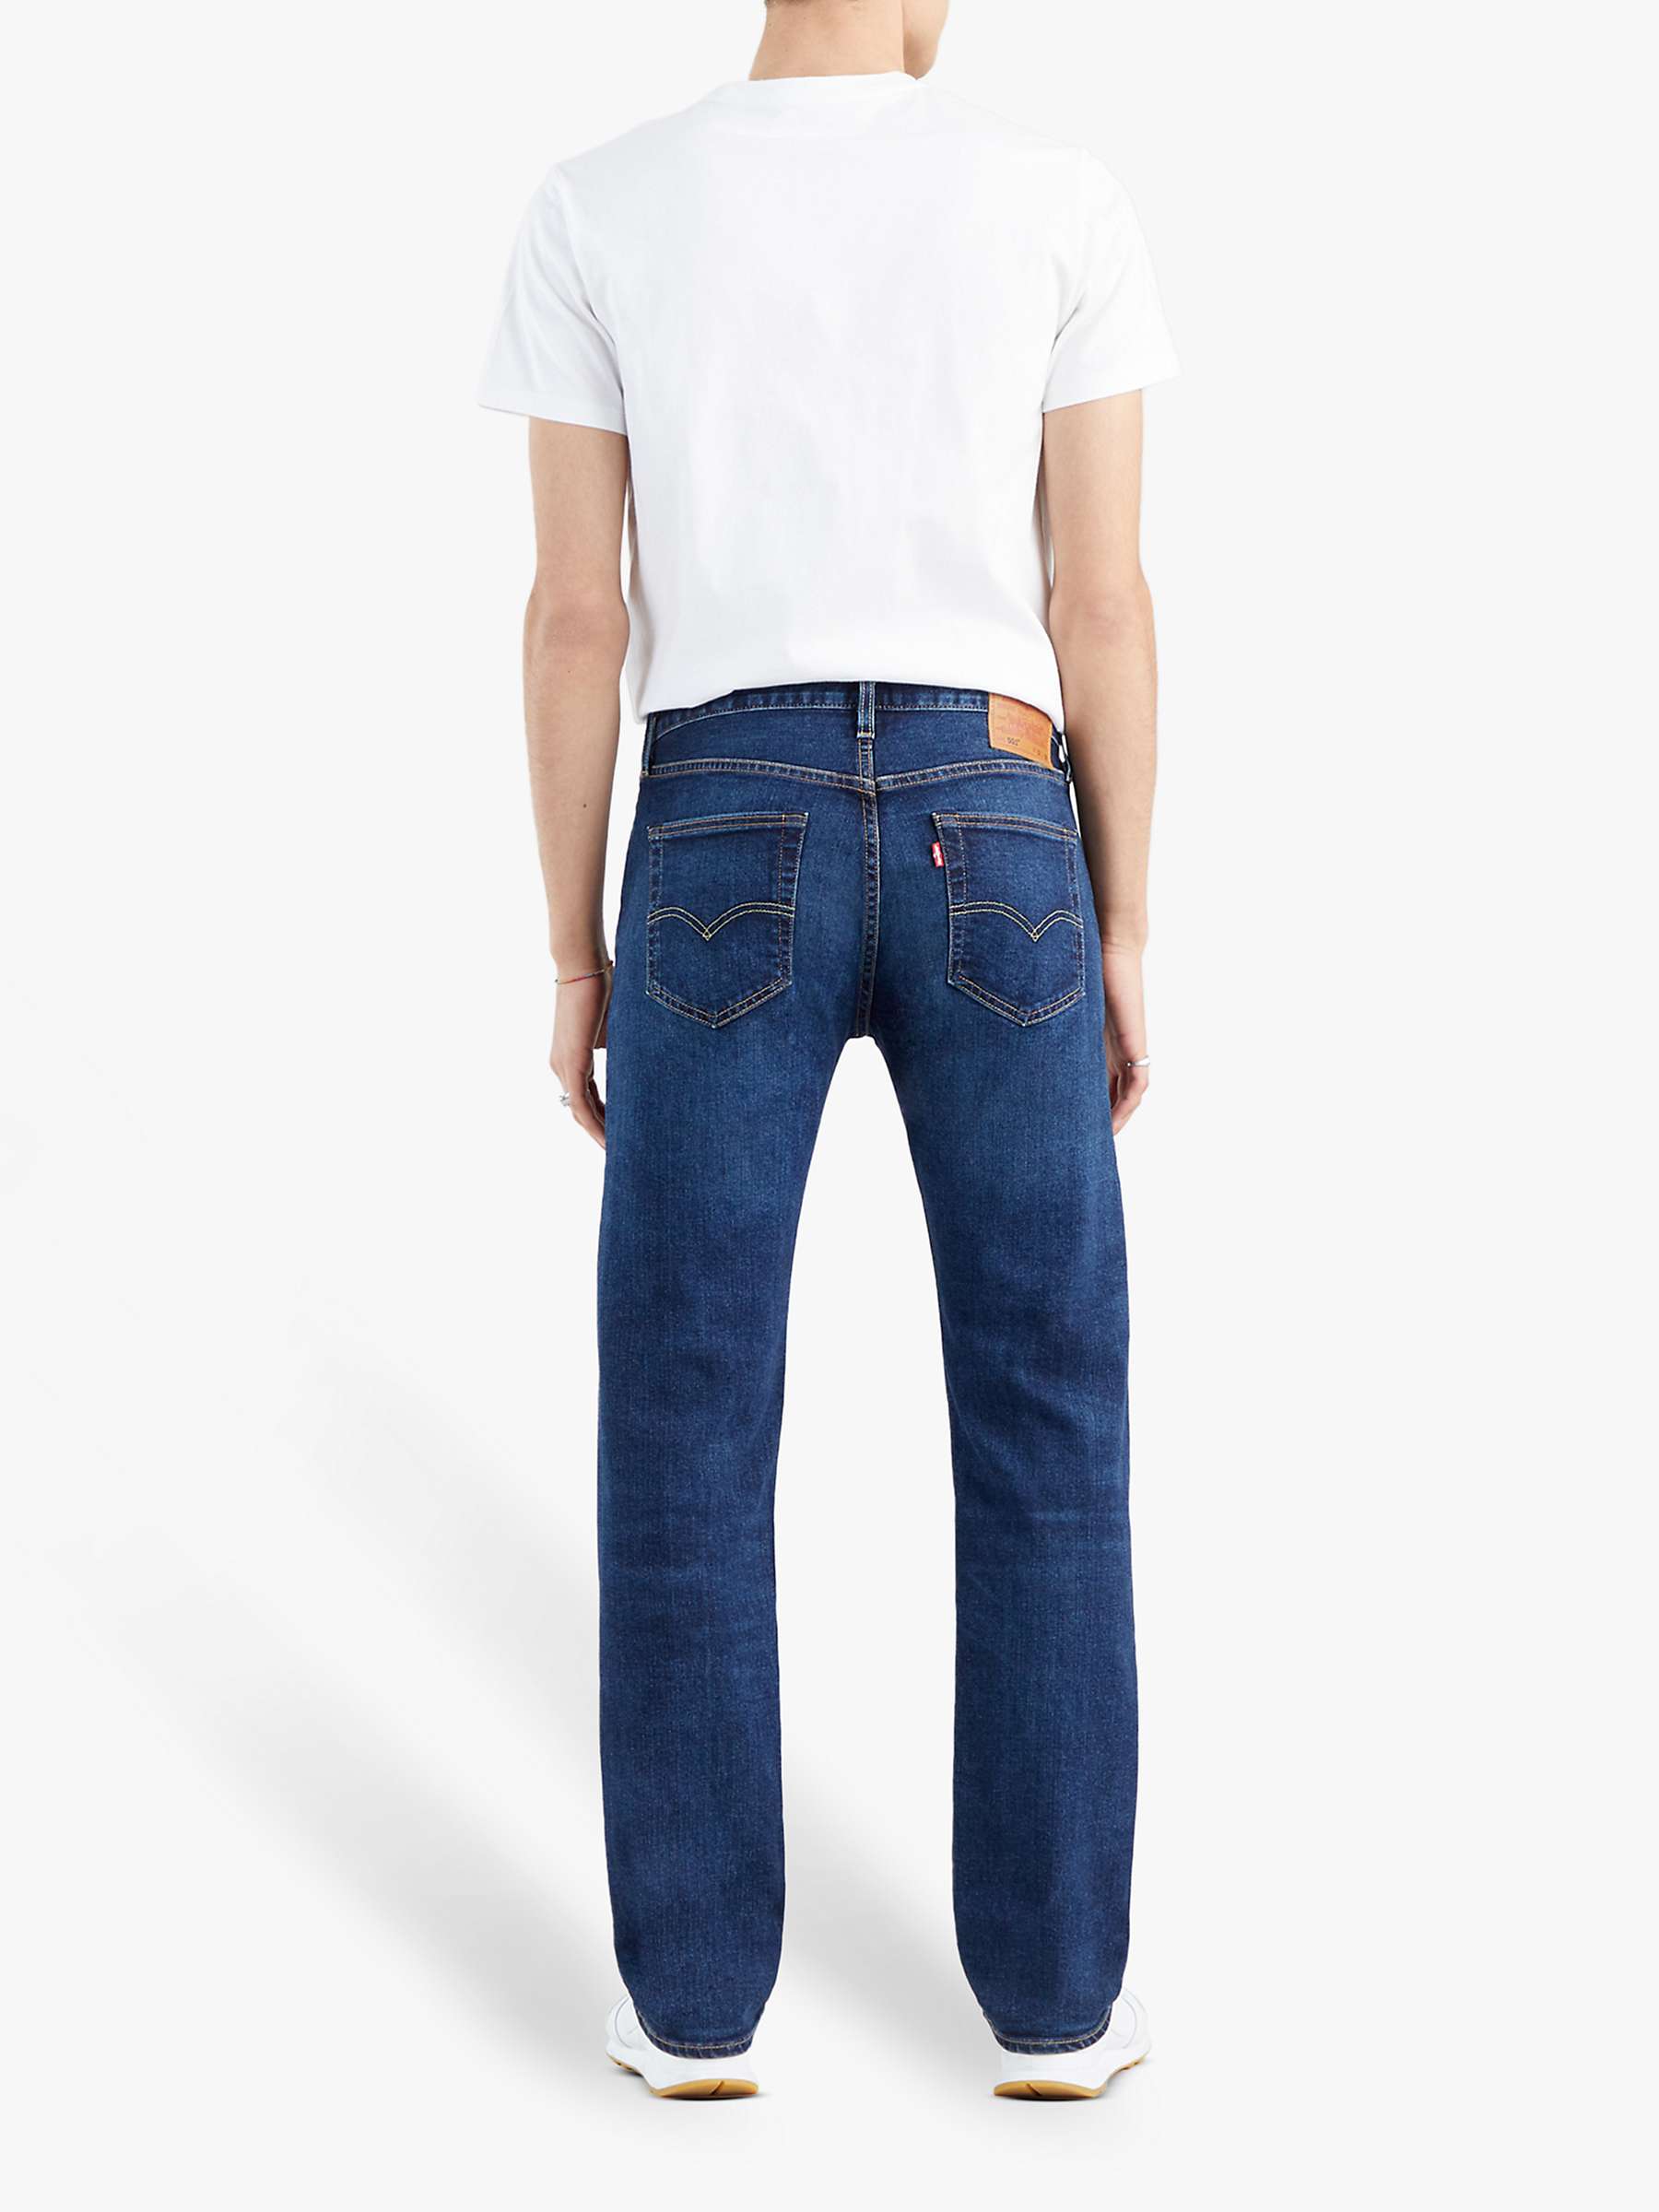 Buy Levi's 501 Original Straight Jeans, Do The Rump Online at johnlewis.com